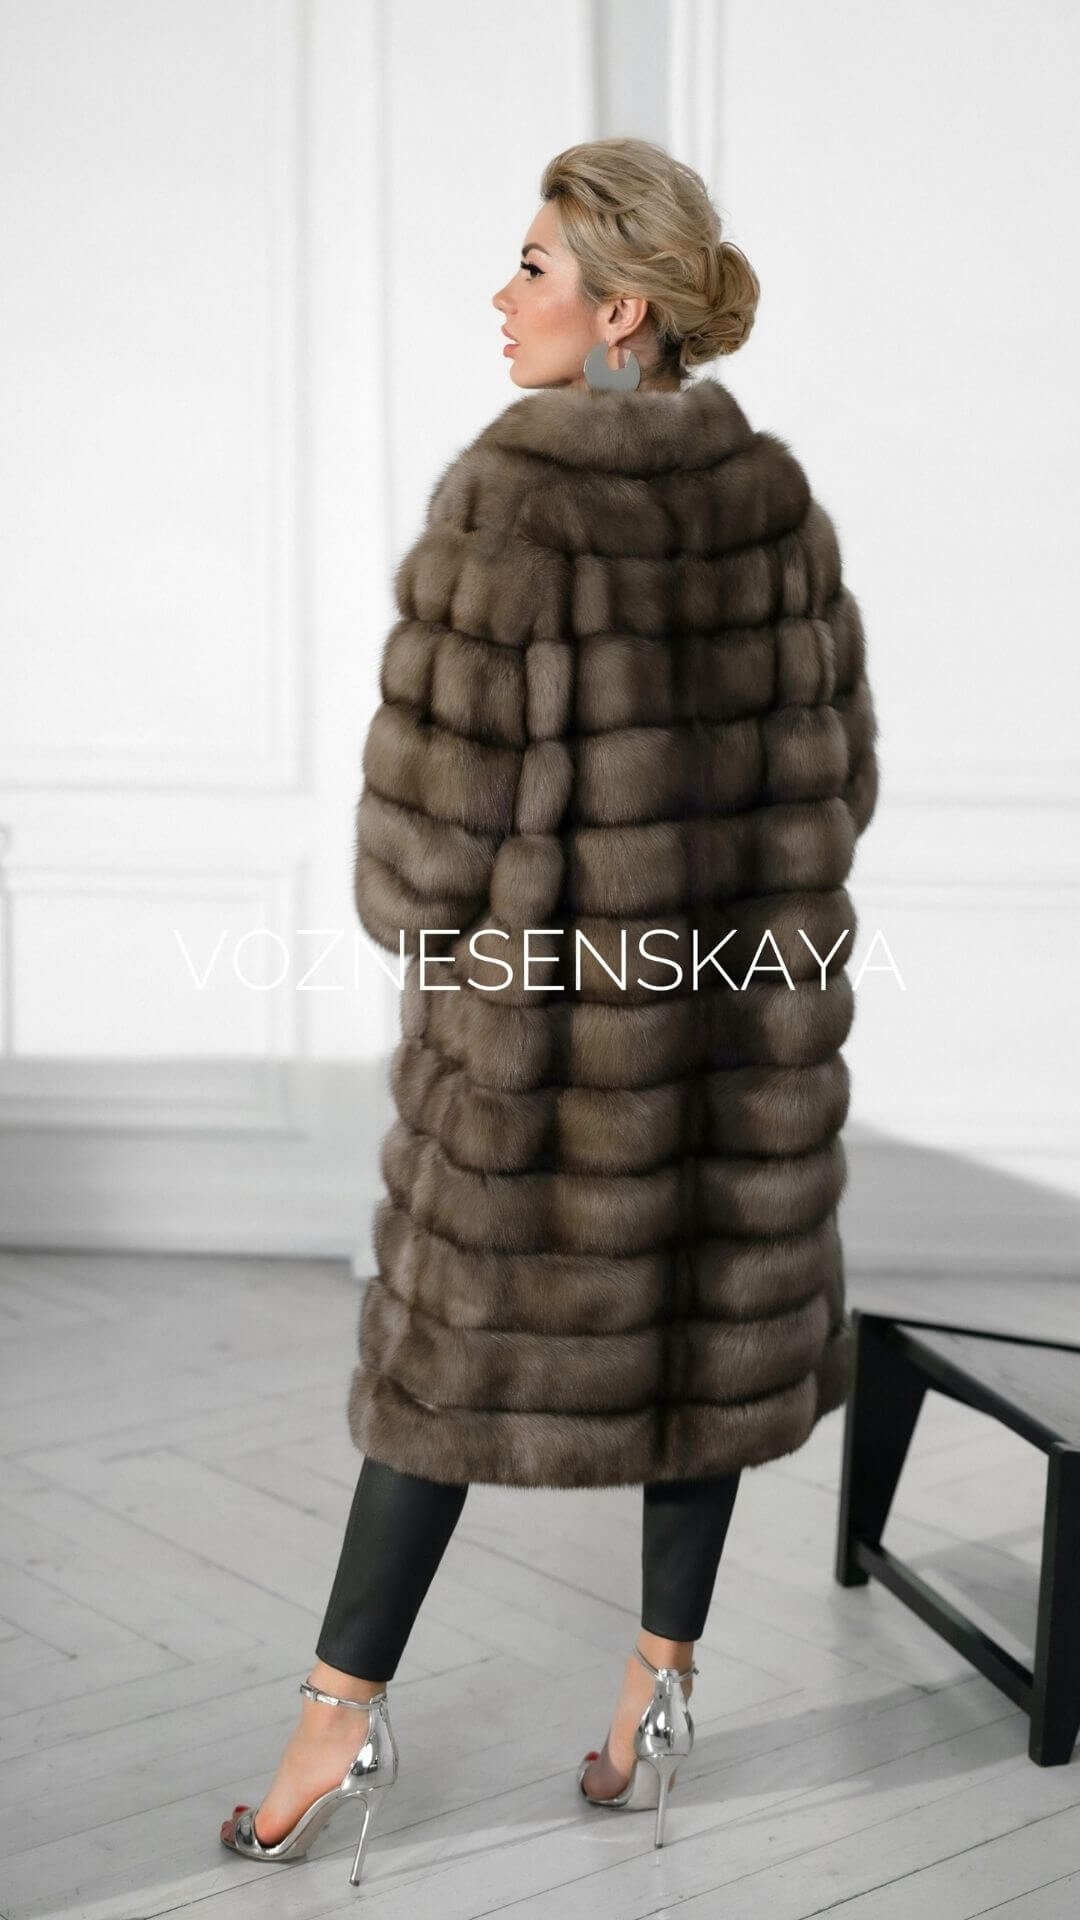 Sew a fur coat to order